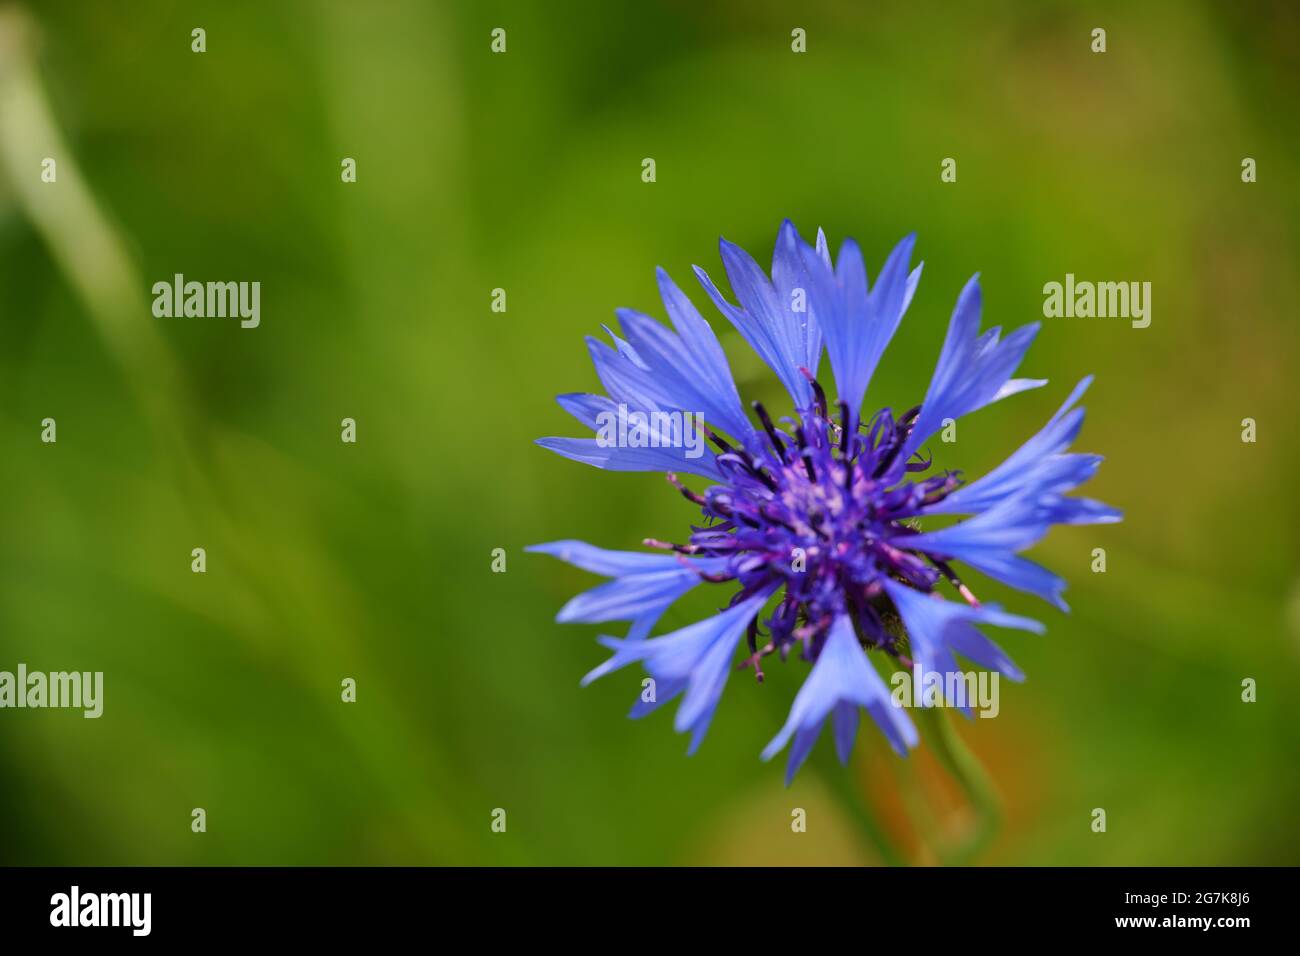 Closeup of purple cornflower - bluebottle on a blurred green background Stock Photo